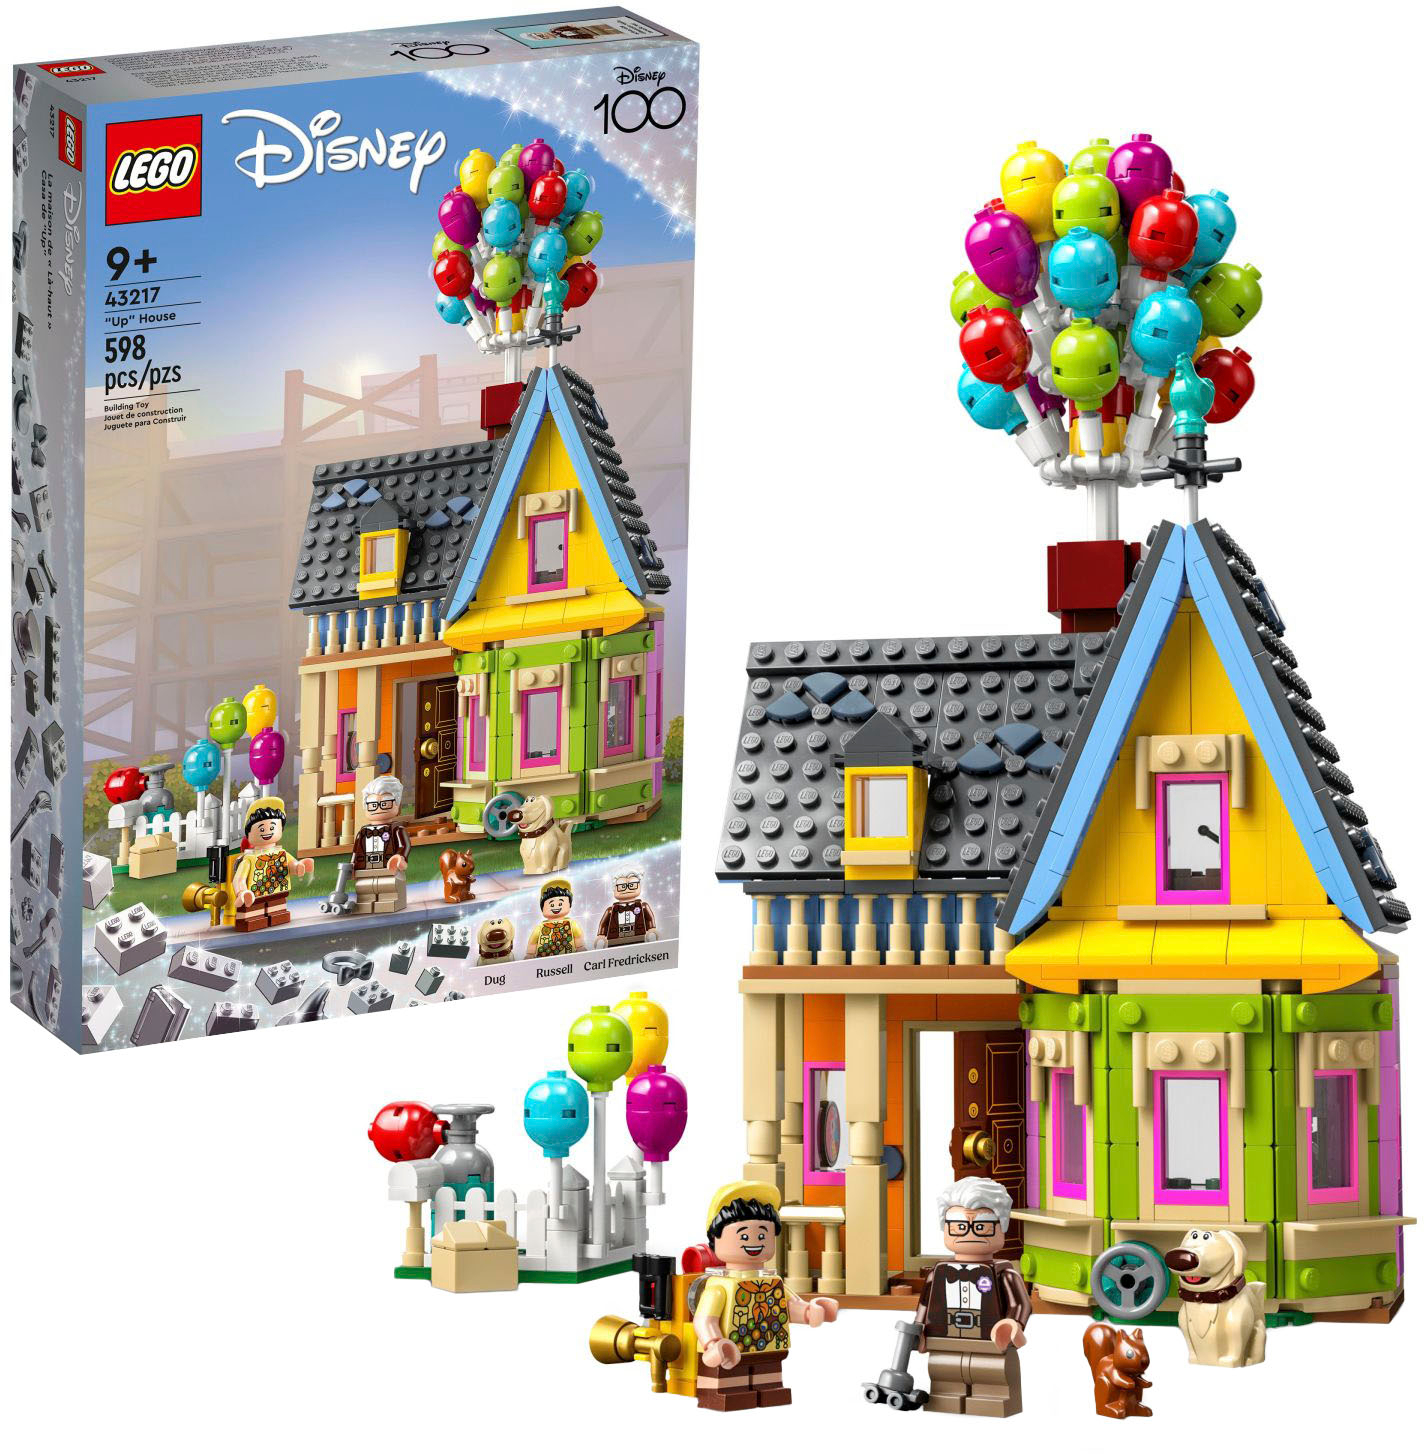 saltet ambulance Drejning LEGO Disney and Pixar 'Up' House 43217 6427575 - Best Buy